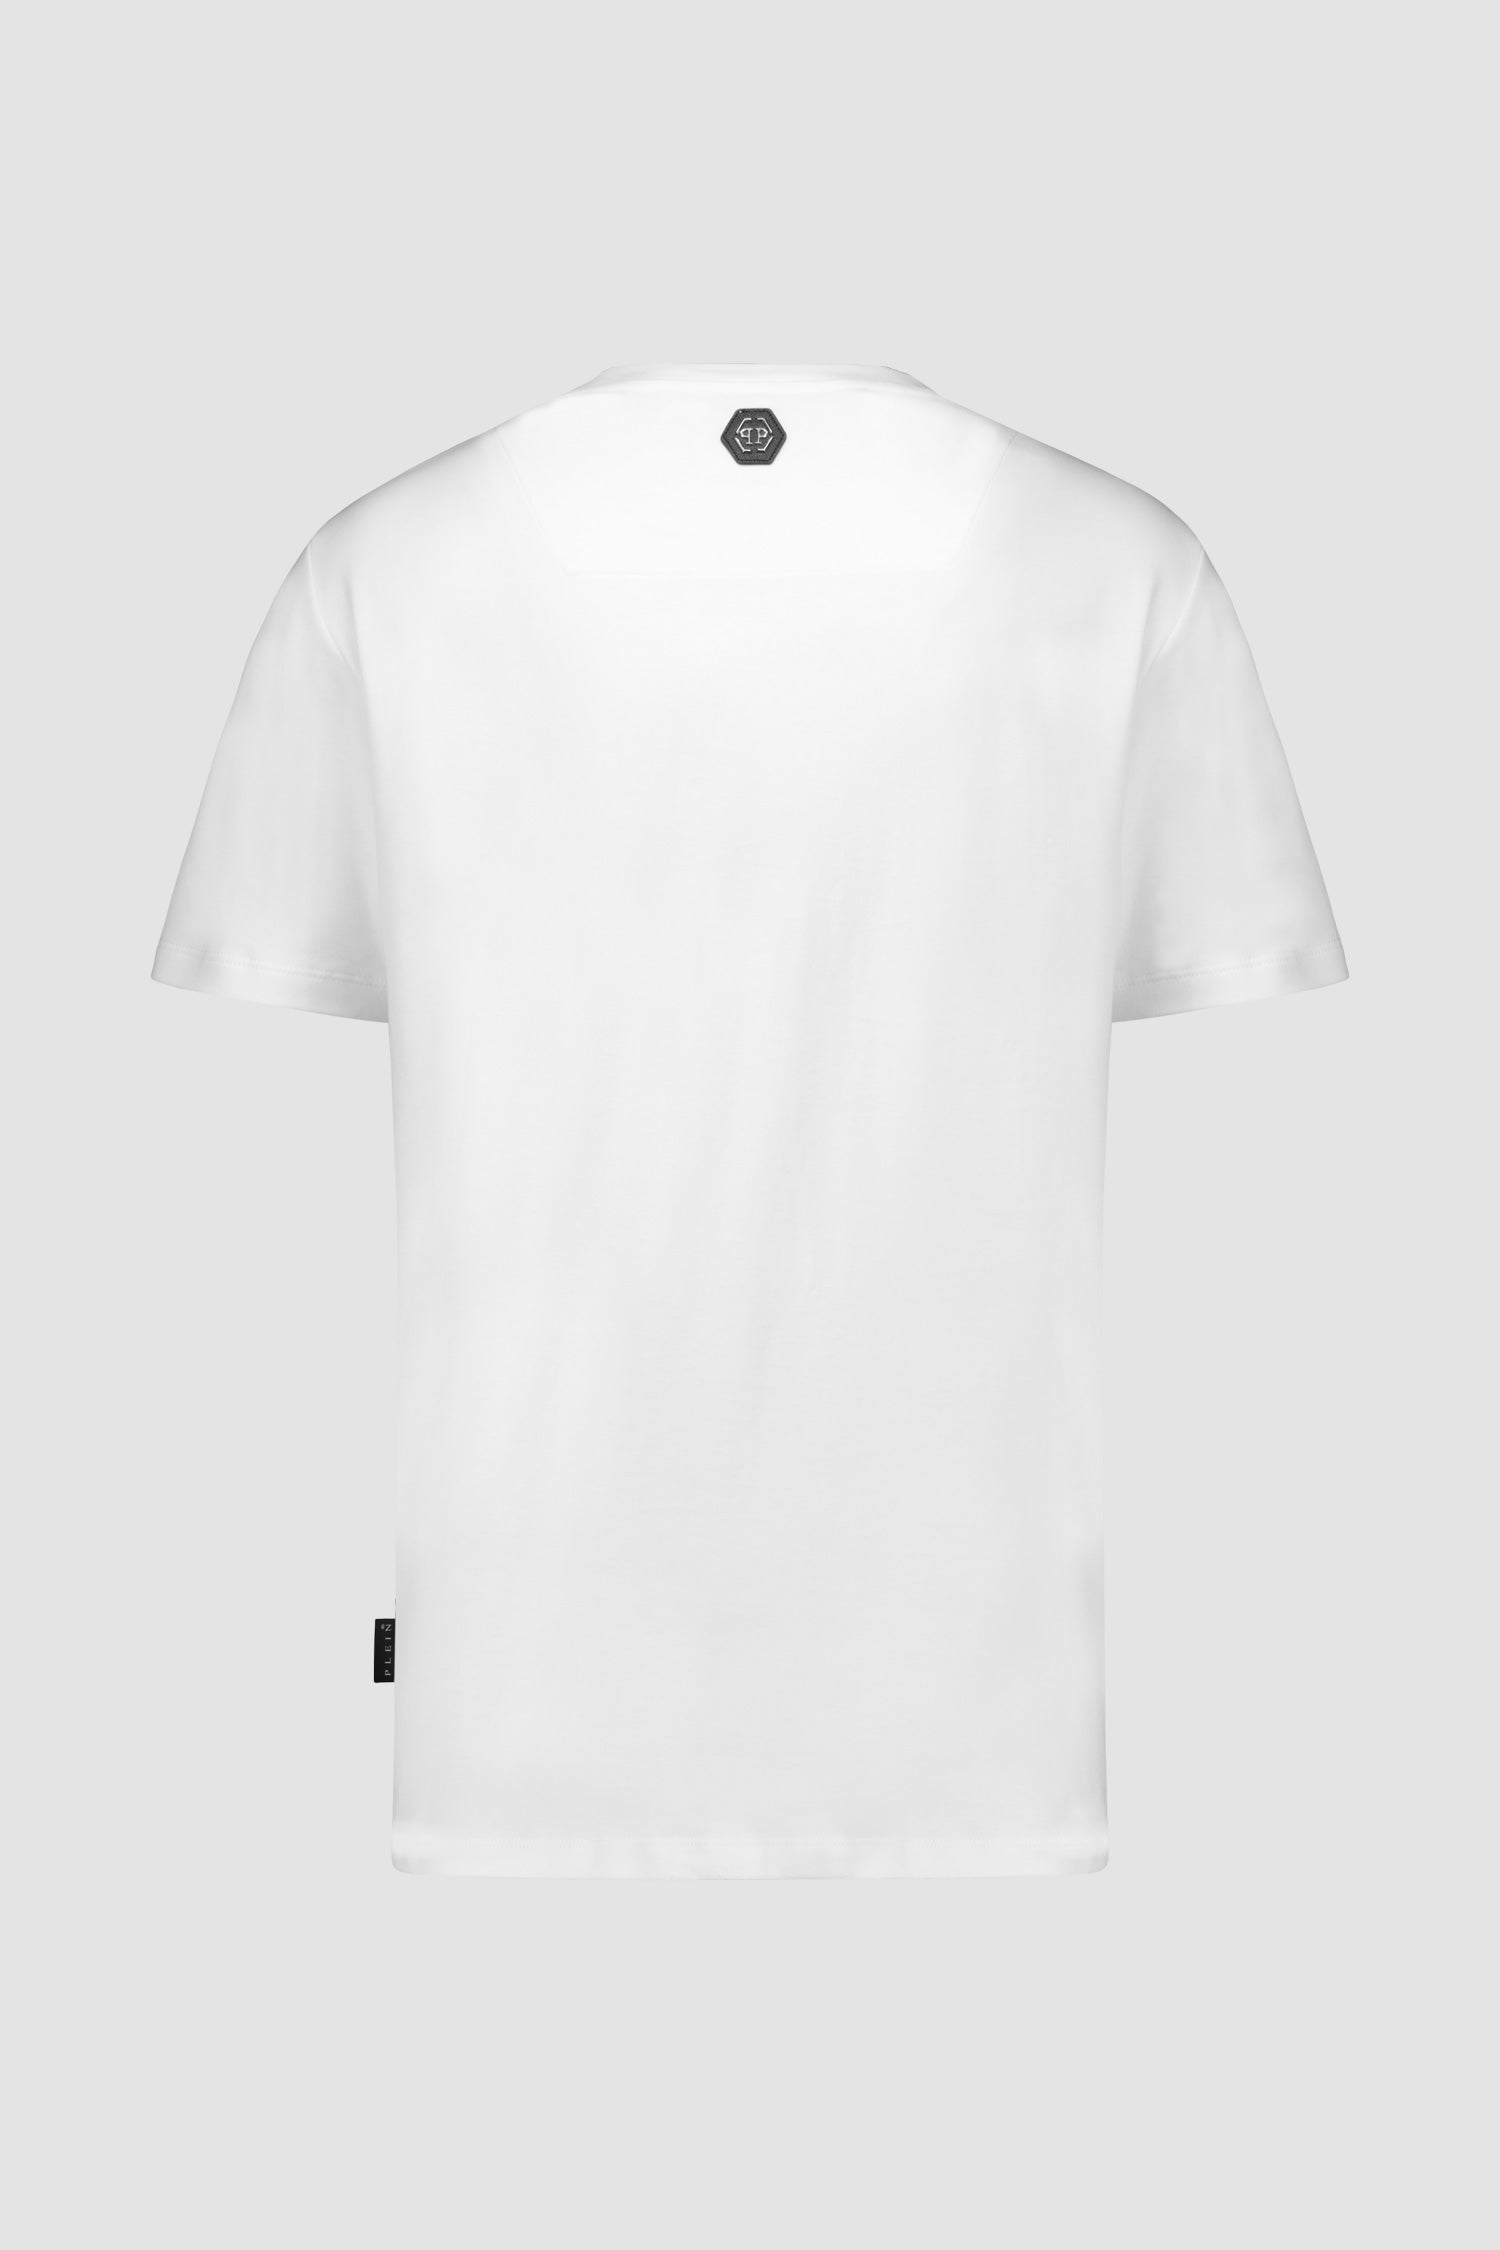 Philipp Plein White Round Neck SS PP Glass T-Shirt